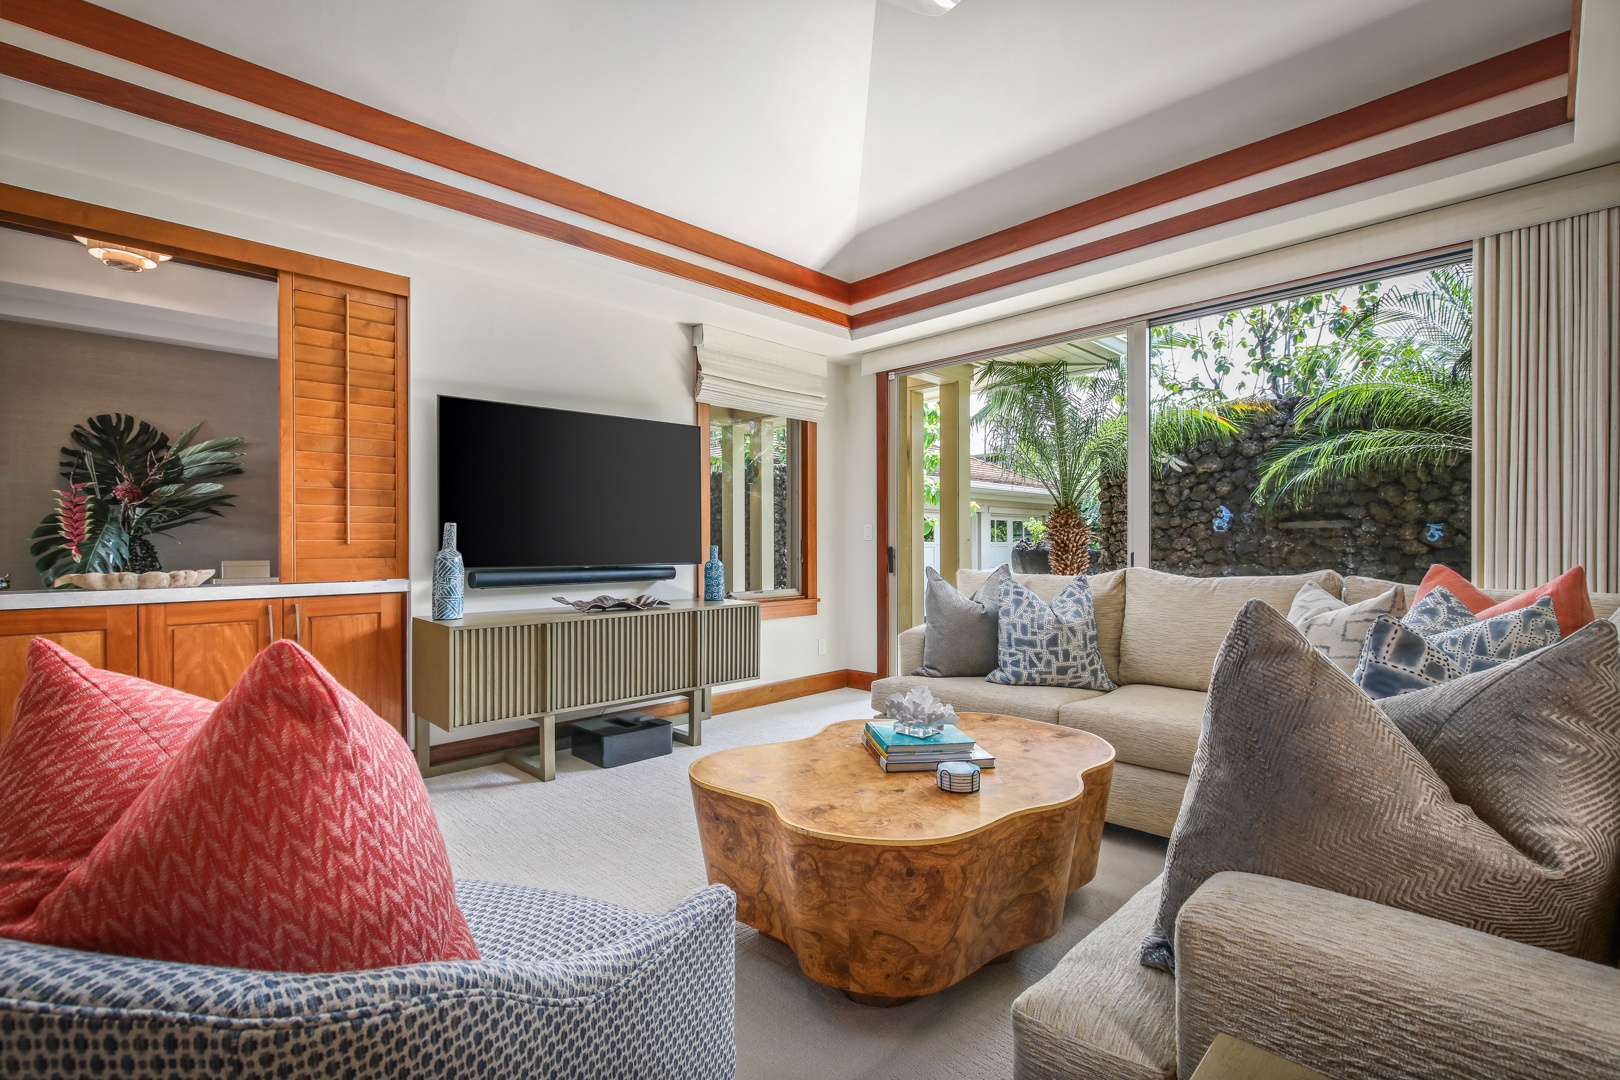 Kailua Kona Vacation Rentals, 4BD Hainoa Estate (122) at Four Seasons Resort at Hualalai - Alternate view of the media room.